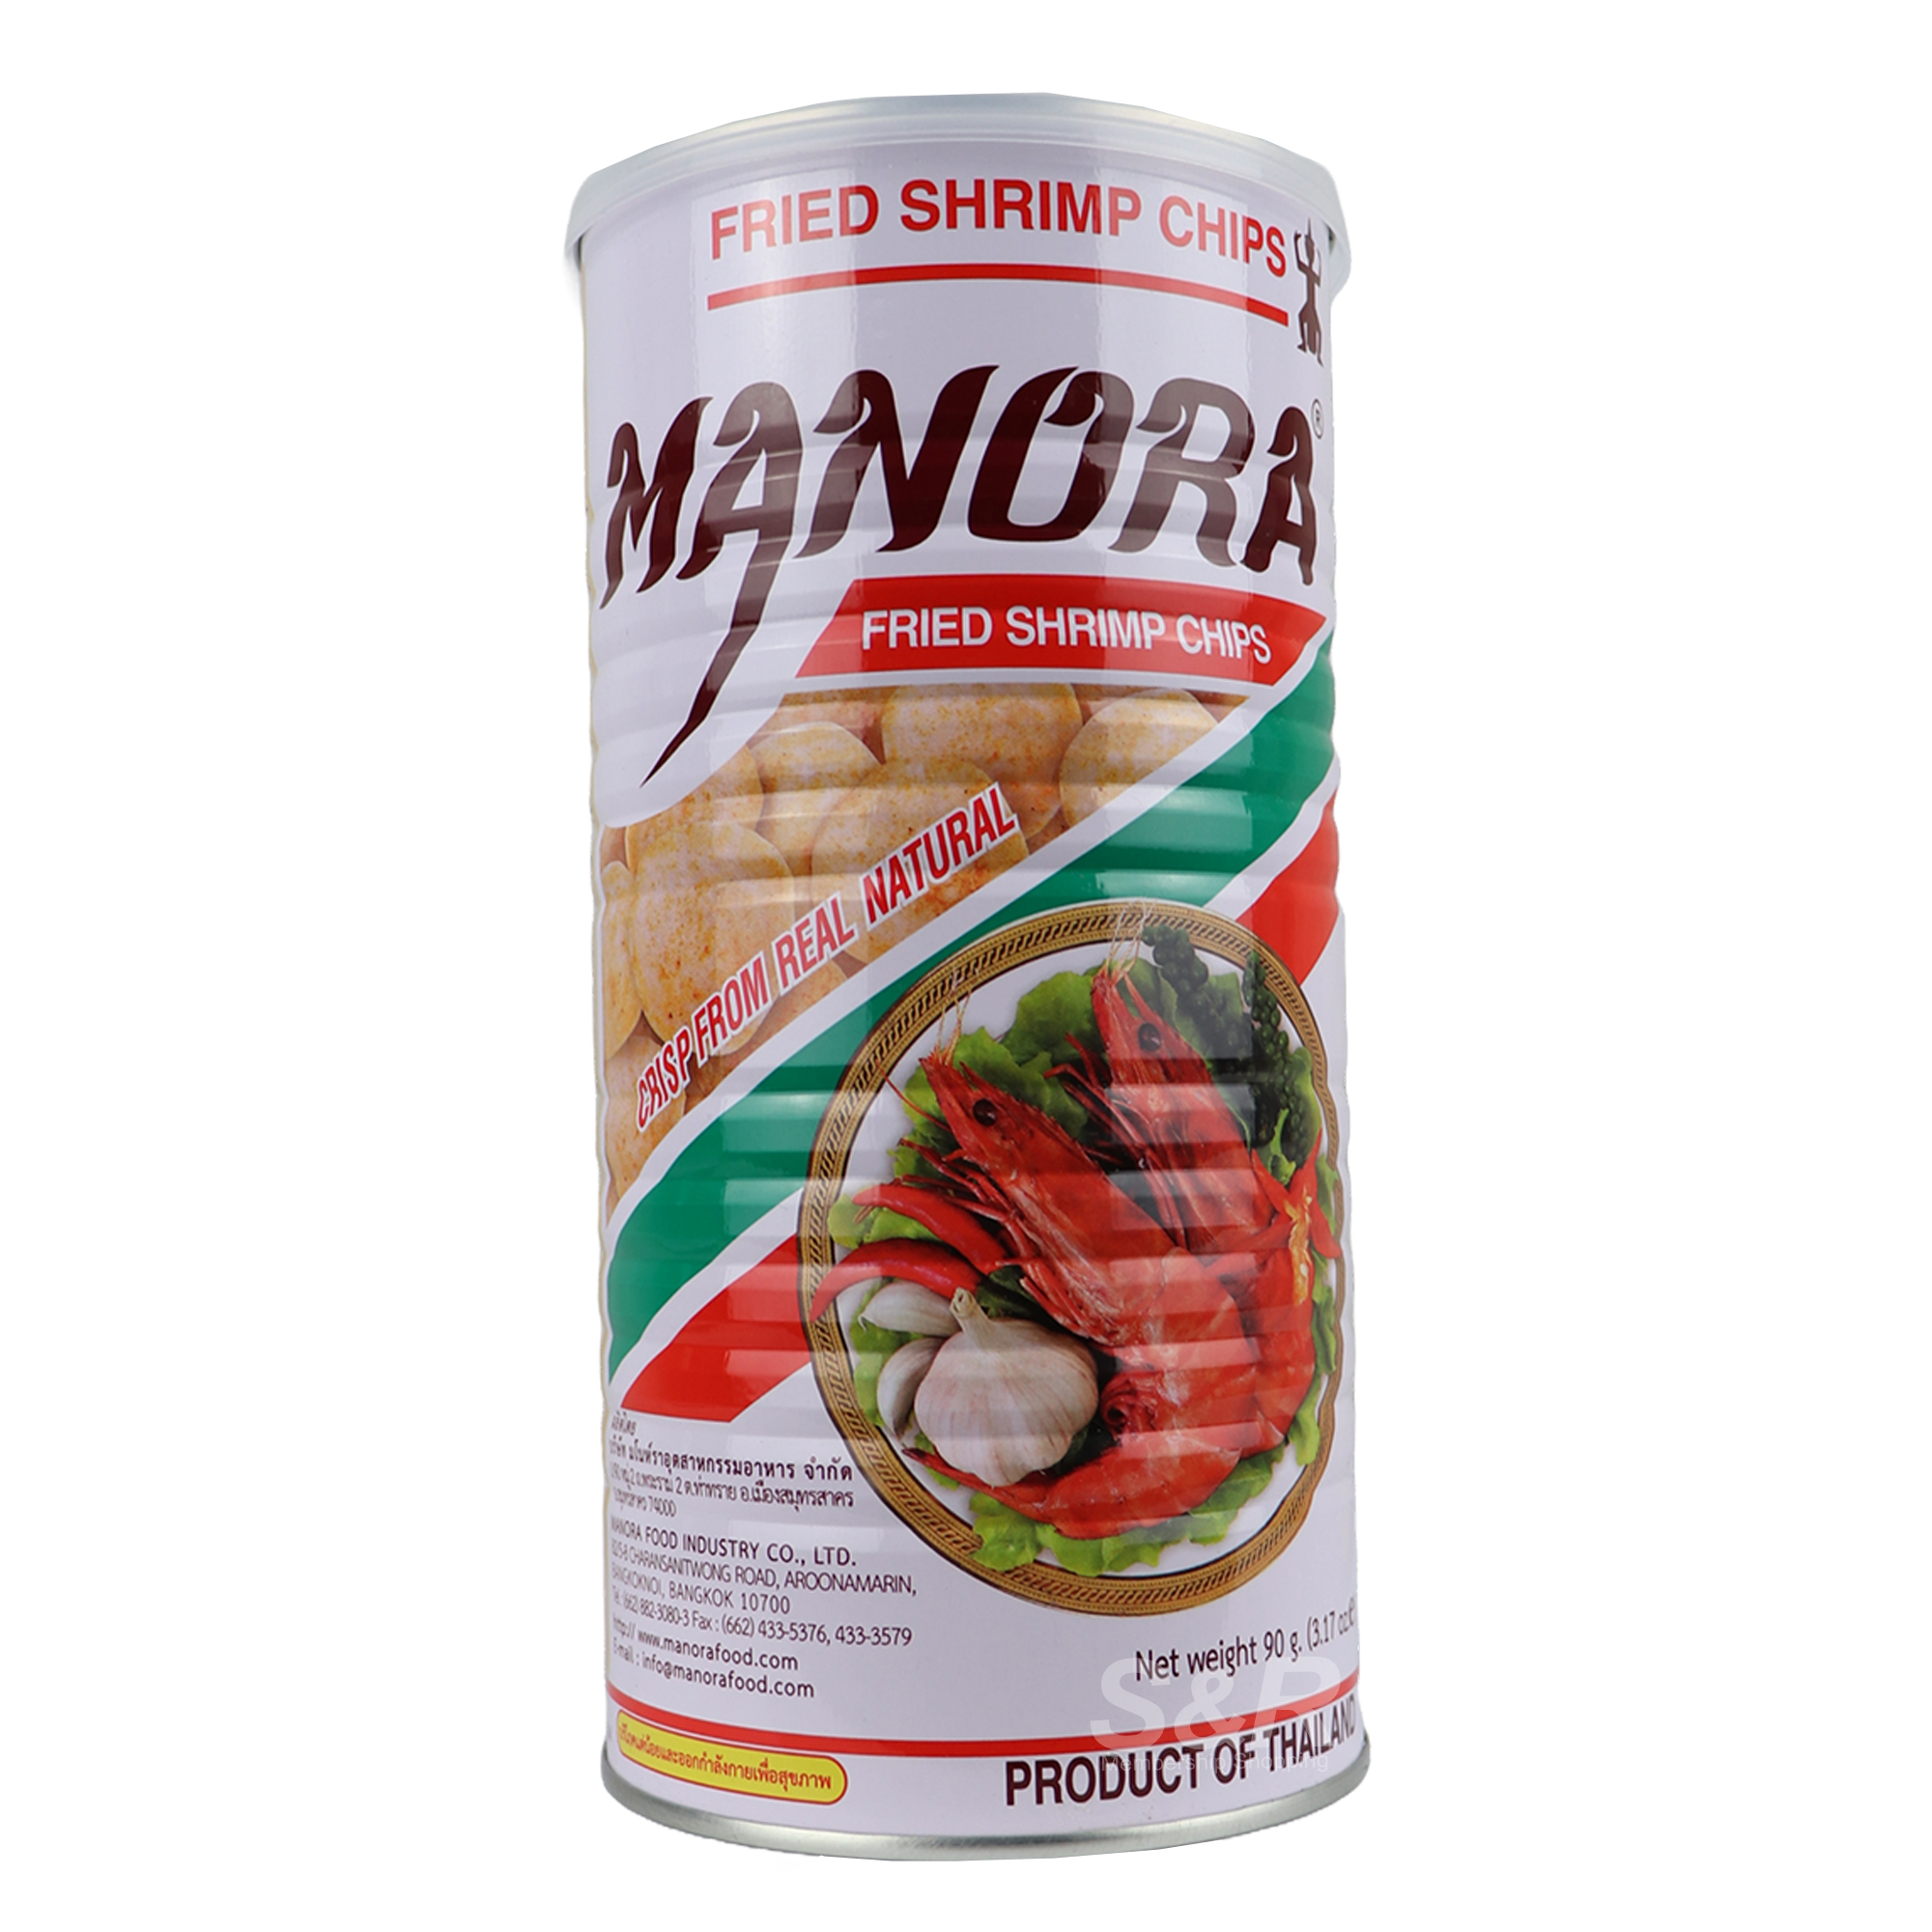 Manora Fried Shrimp Chips 90g